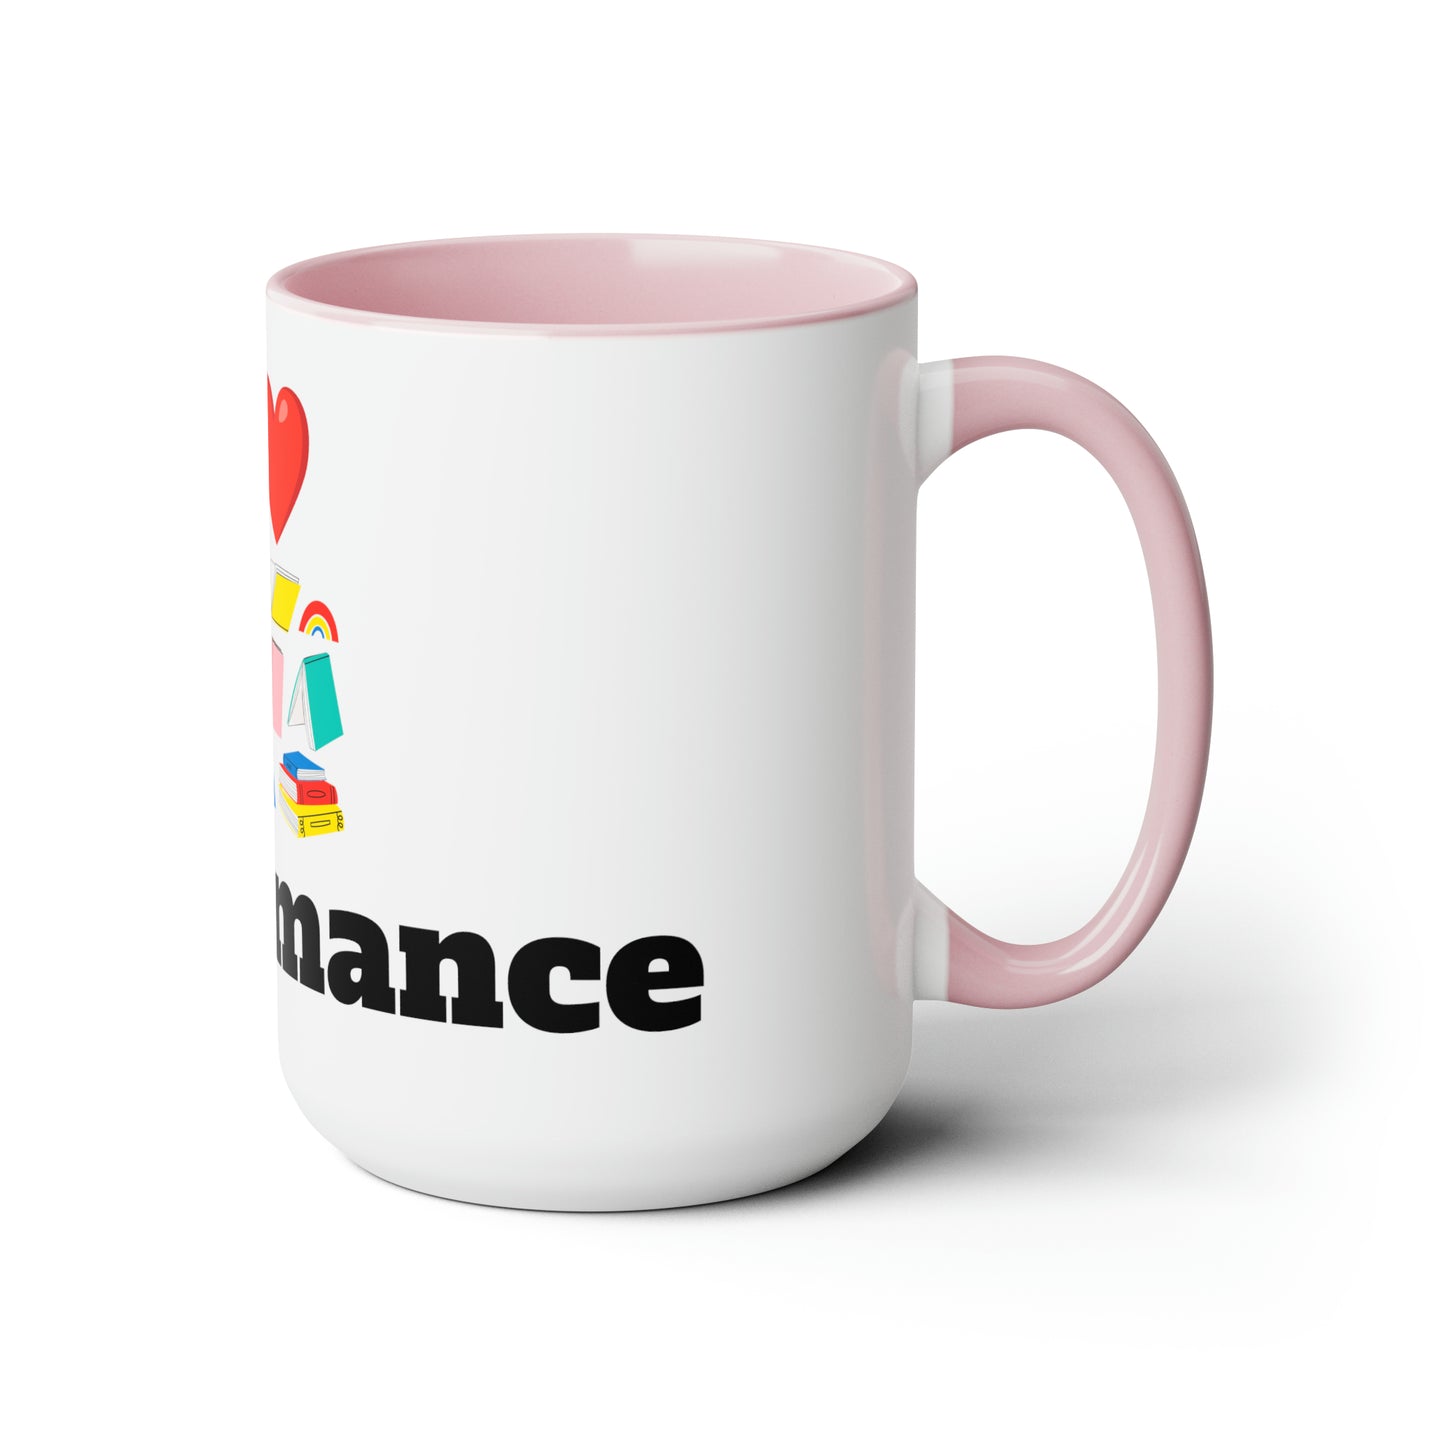 MM Romance Two-Tone Coffee Mugs, 15oz (Serif font)